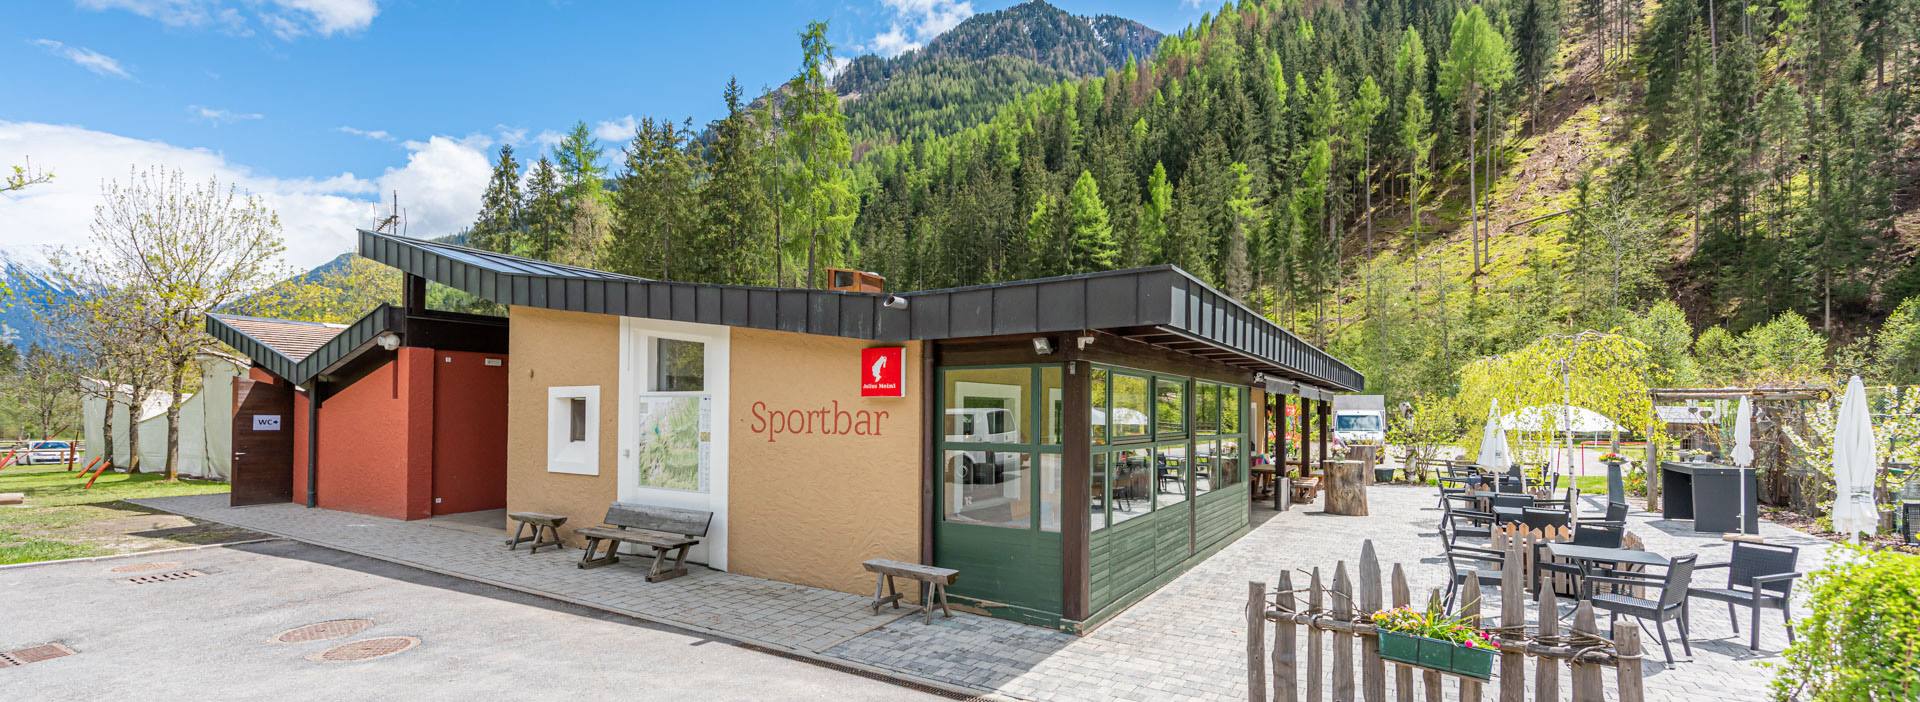 Freizeitareal Sportbar Mühlwald